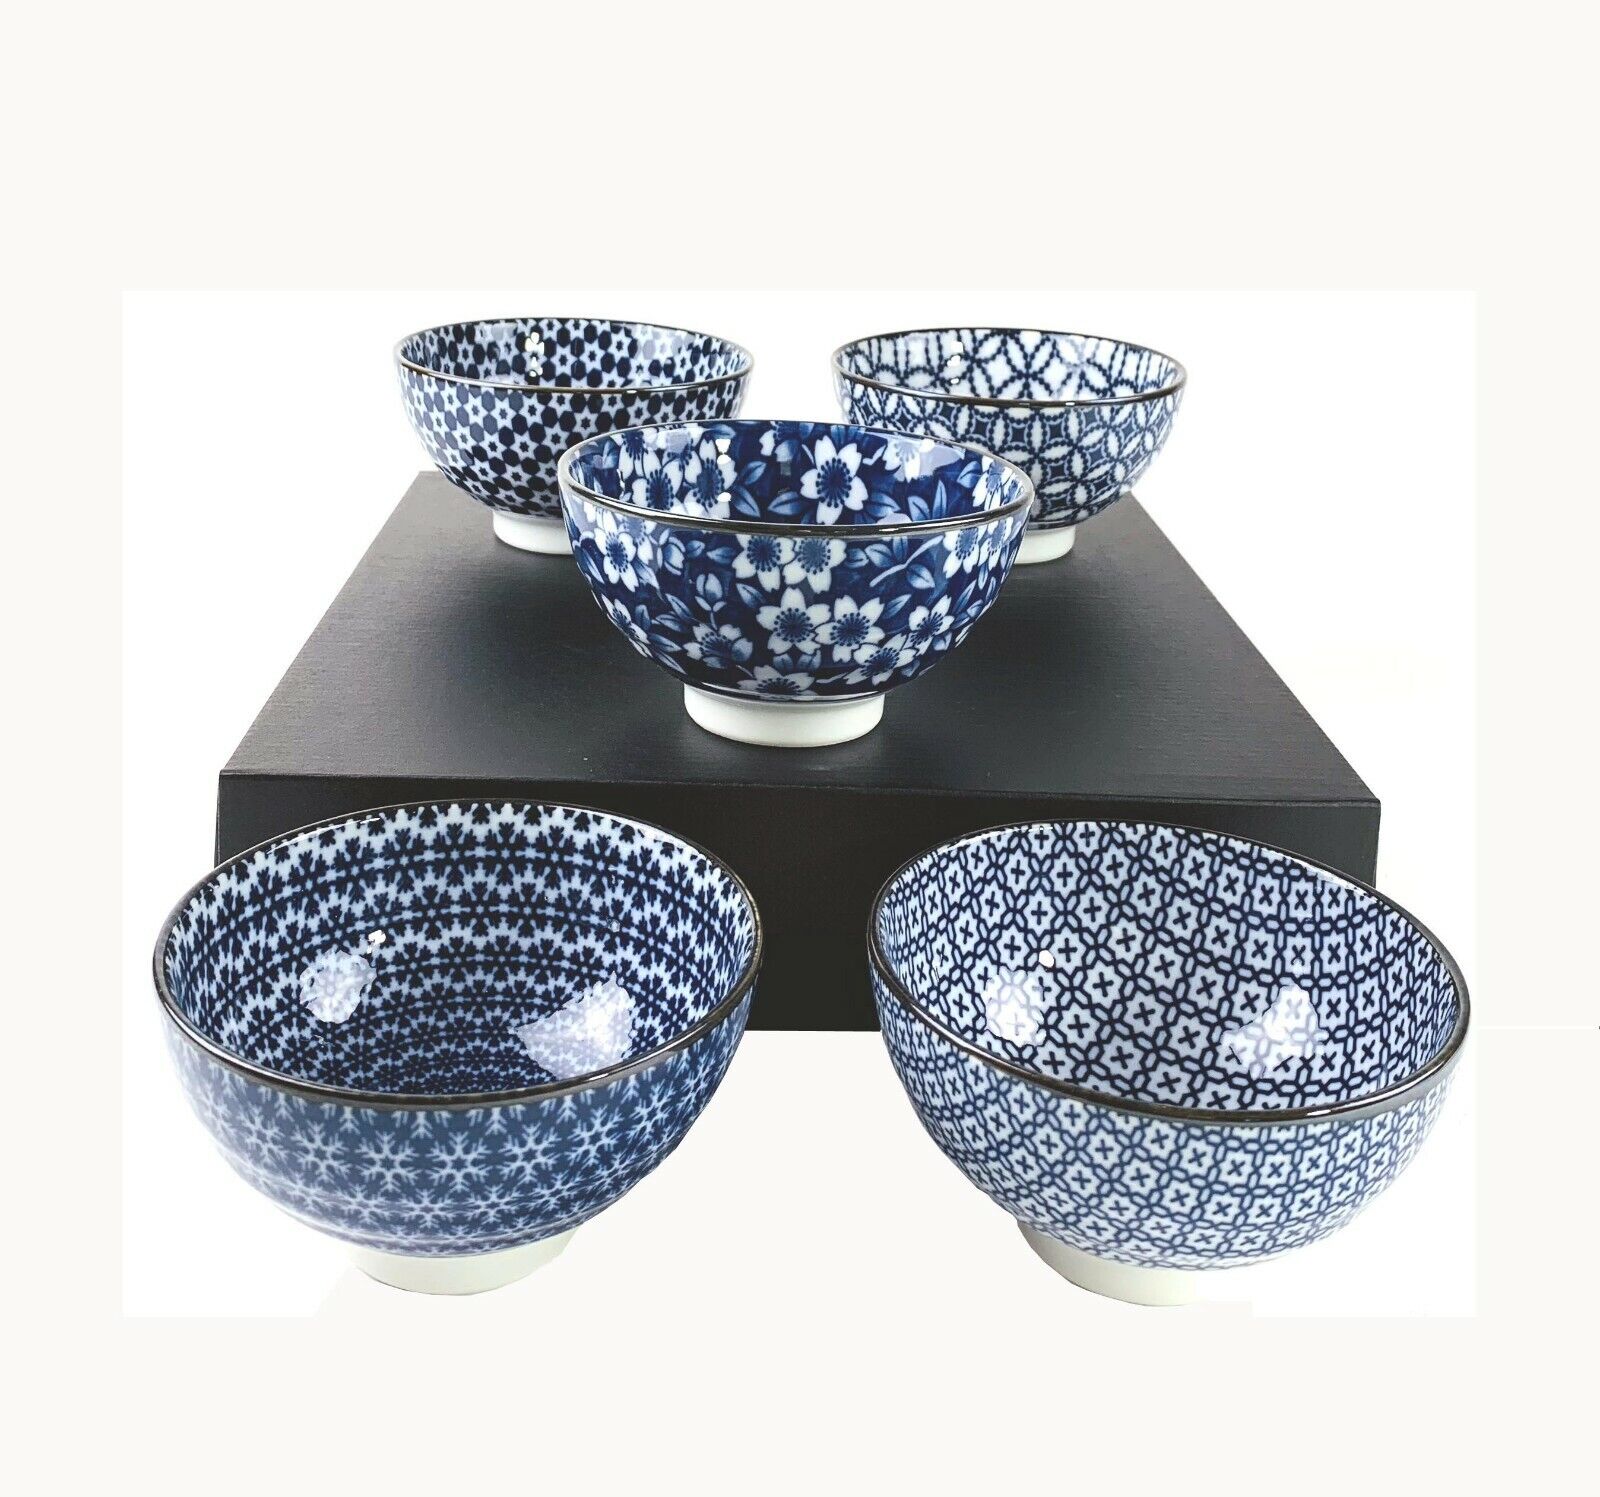 5 Japanese Porcelain Rice Bowls Gift Set Miso Soup Bowl Blue Made in Japan 4686